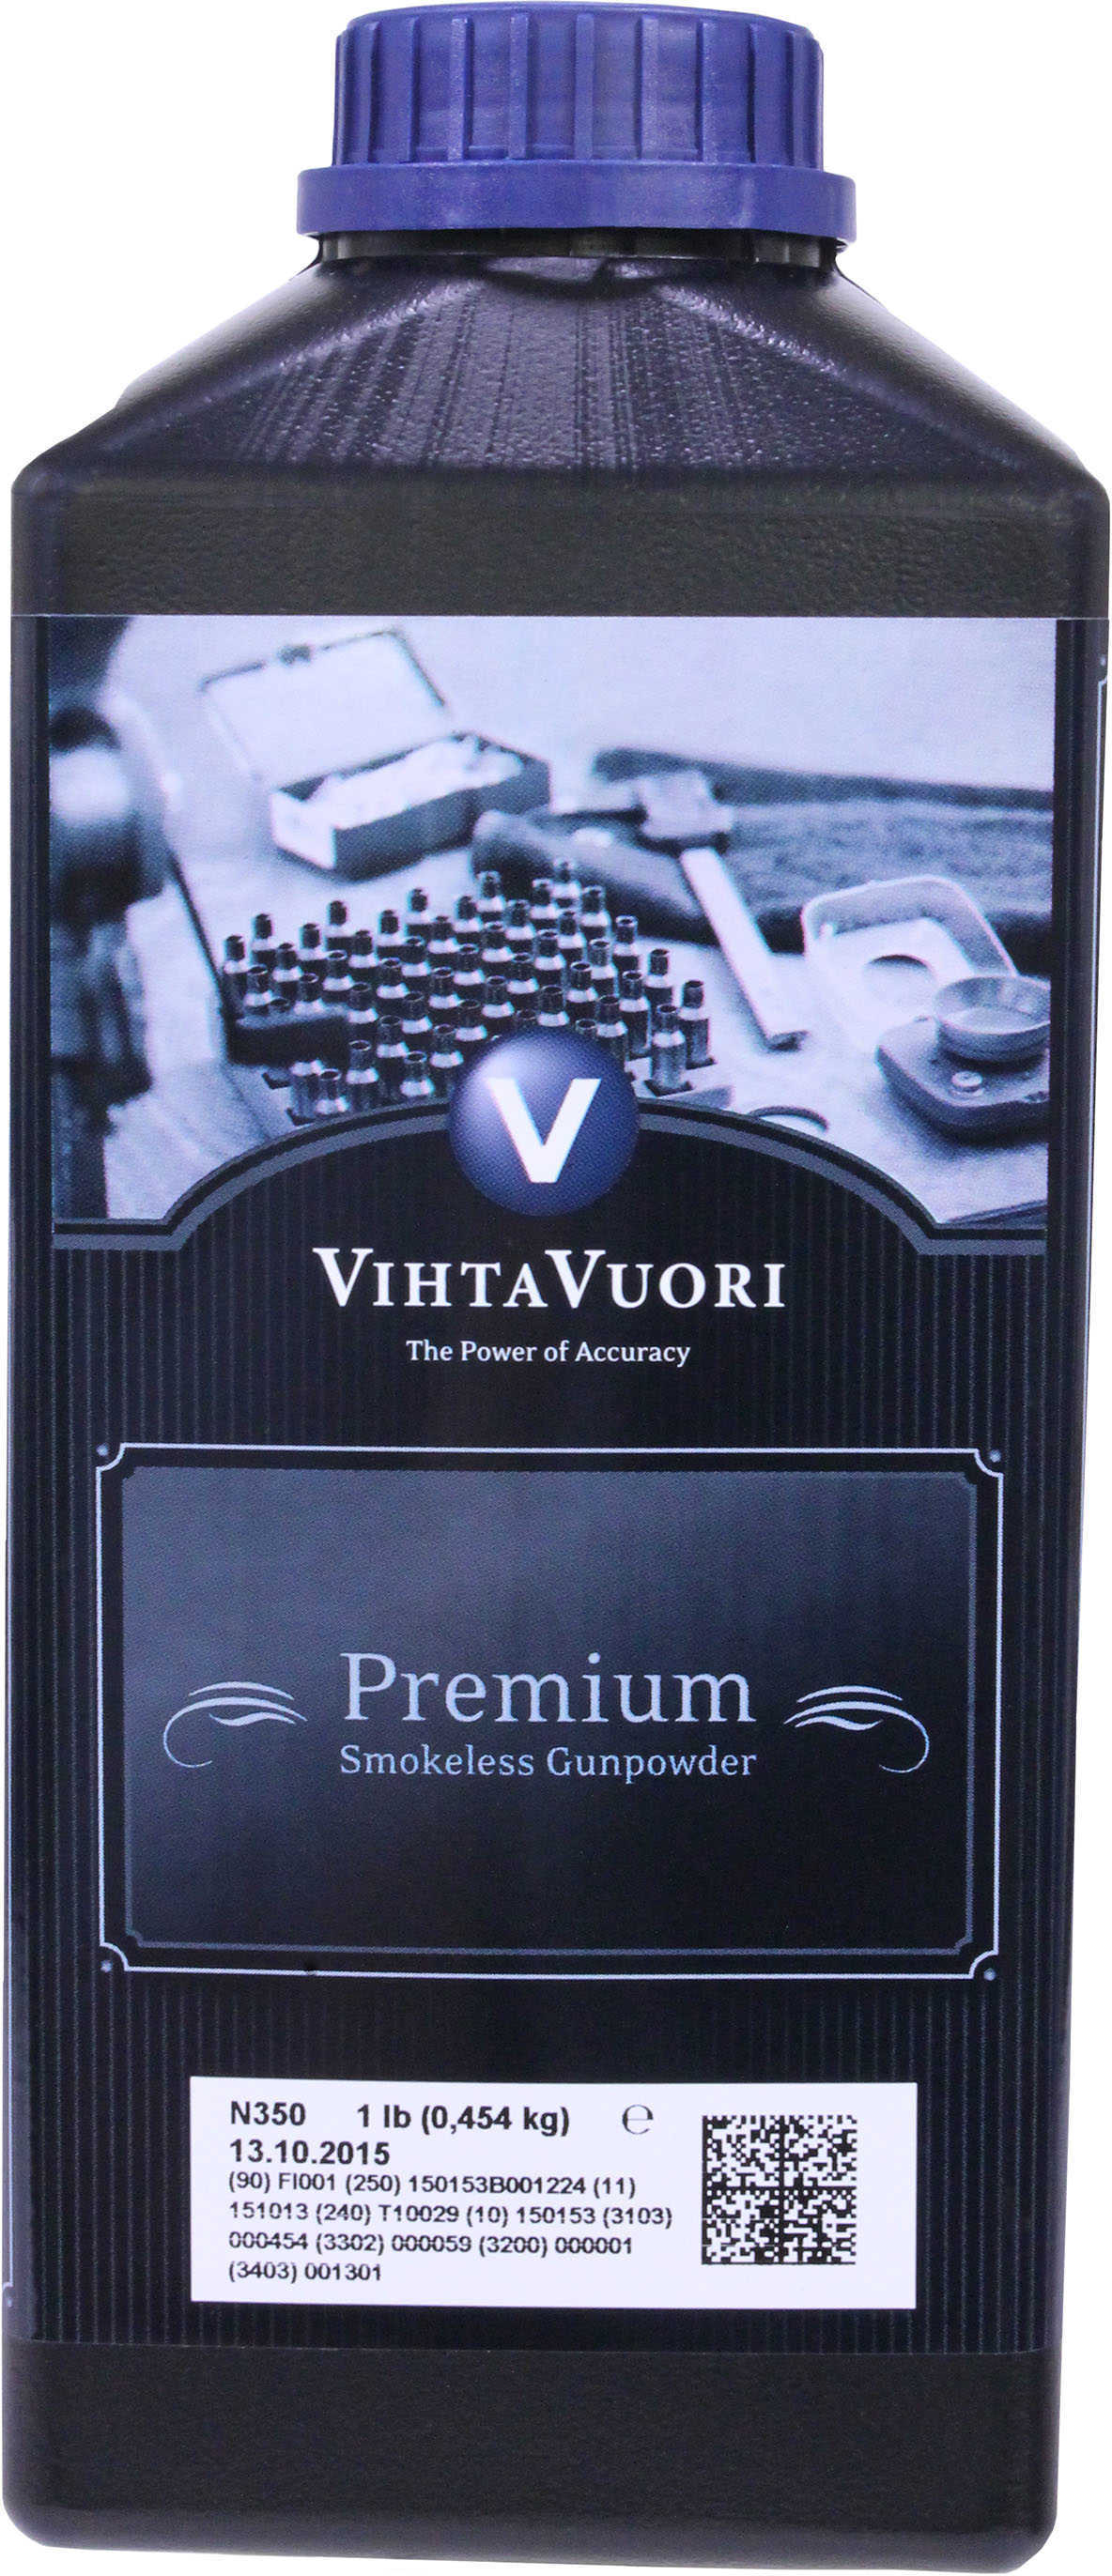 Vihtavuori N350 Smokeless Handgun Powder, 1 lb Container Md: N3501